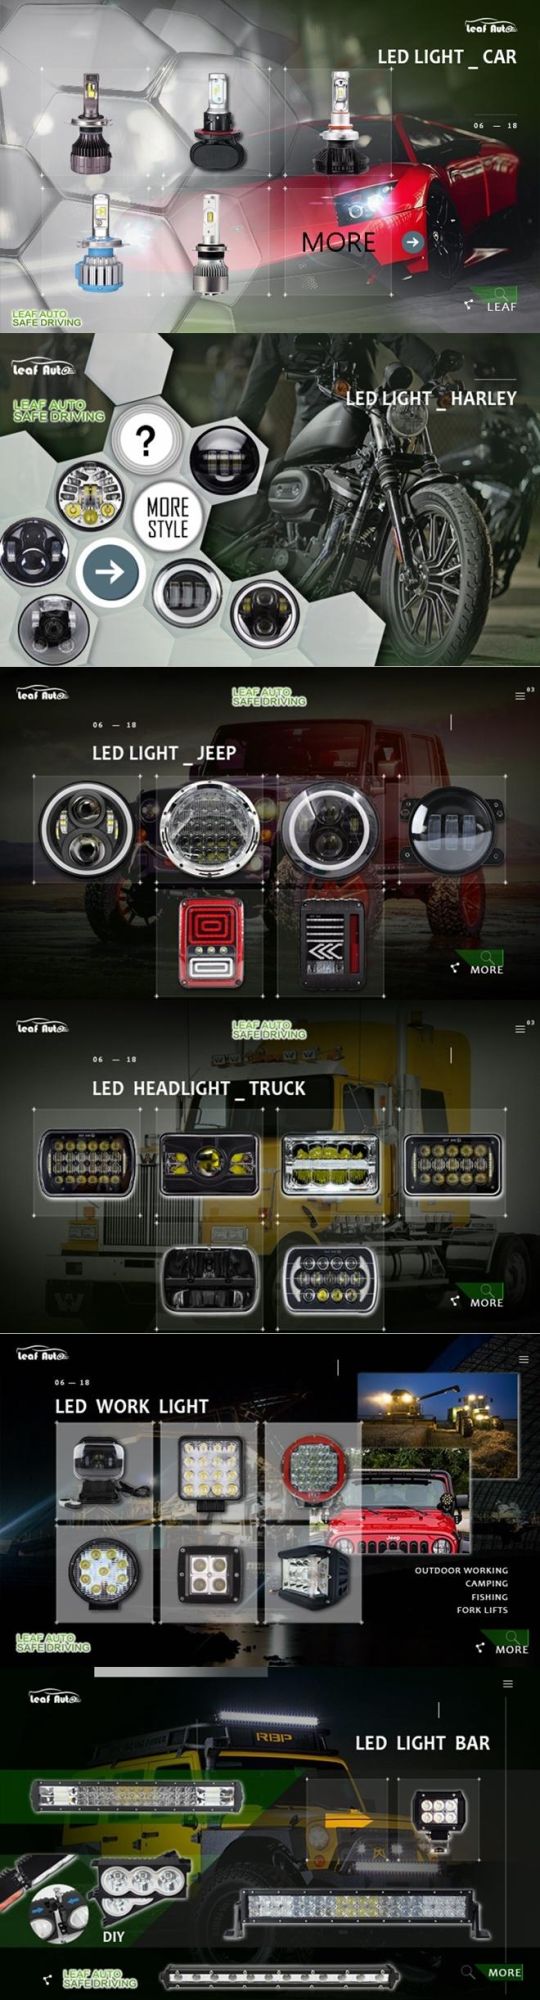 7′′ Black Headlight for Jeep Wrangler Jk, Motorcycle